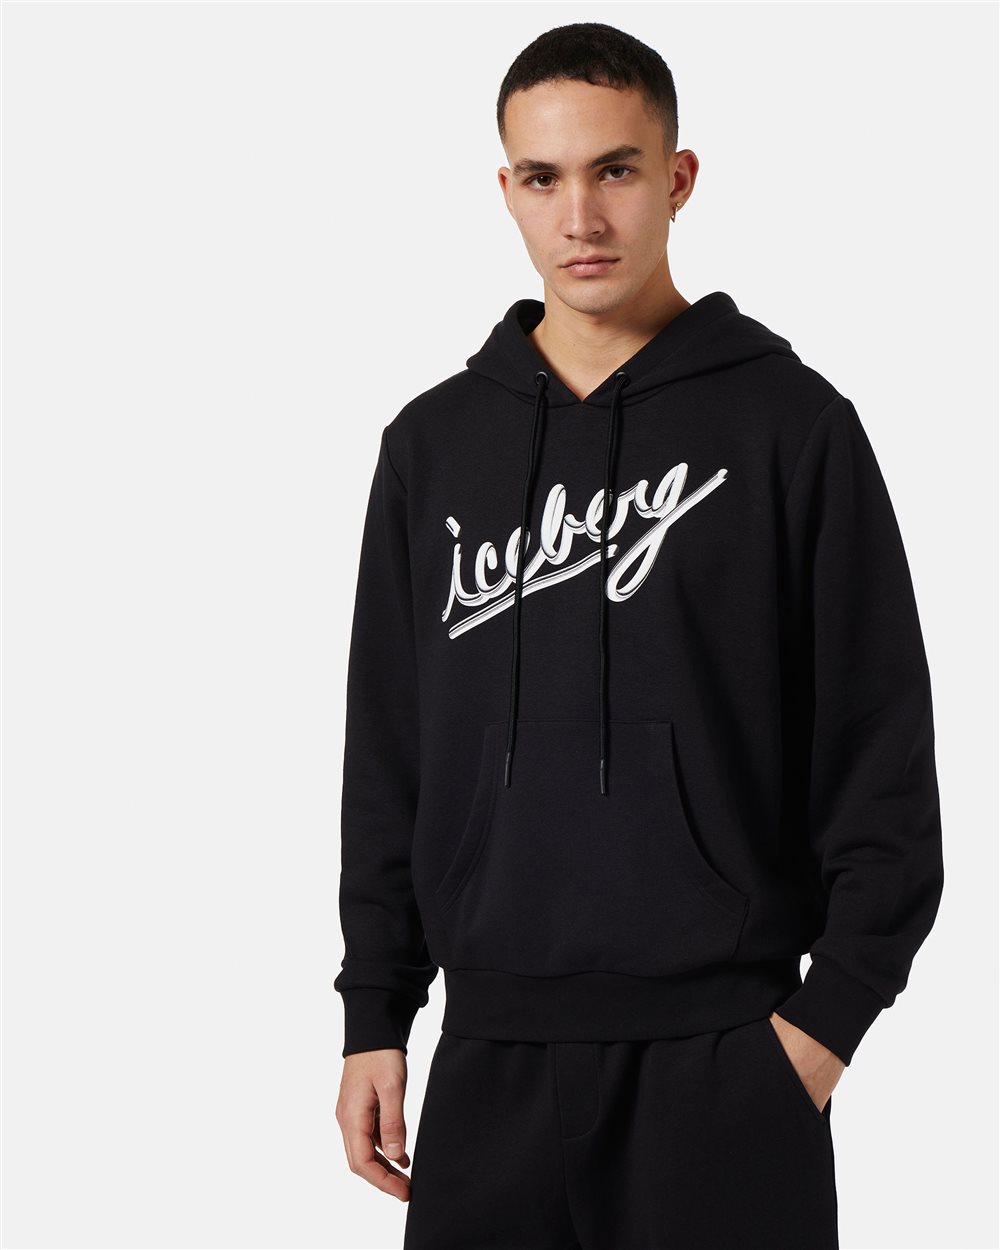 Sweatshirt with hood and logo - Iceberg - Official Website